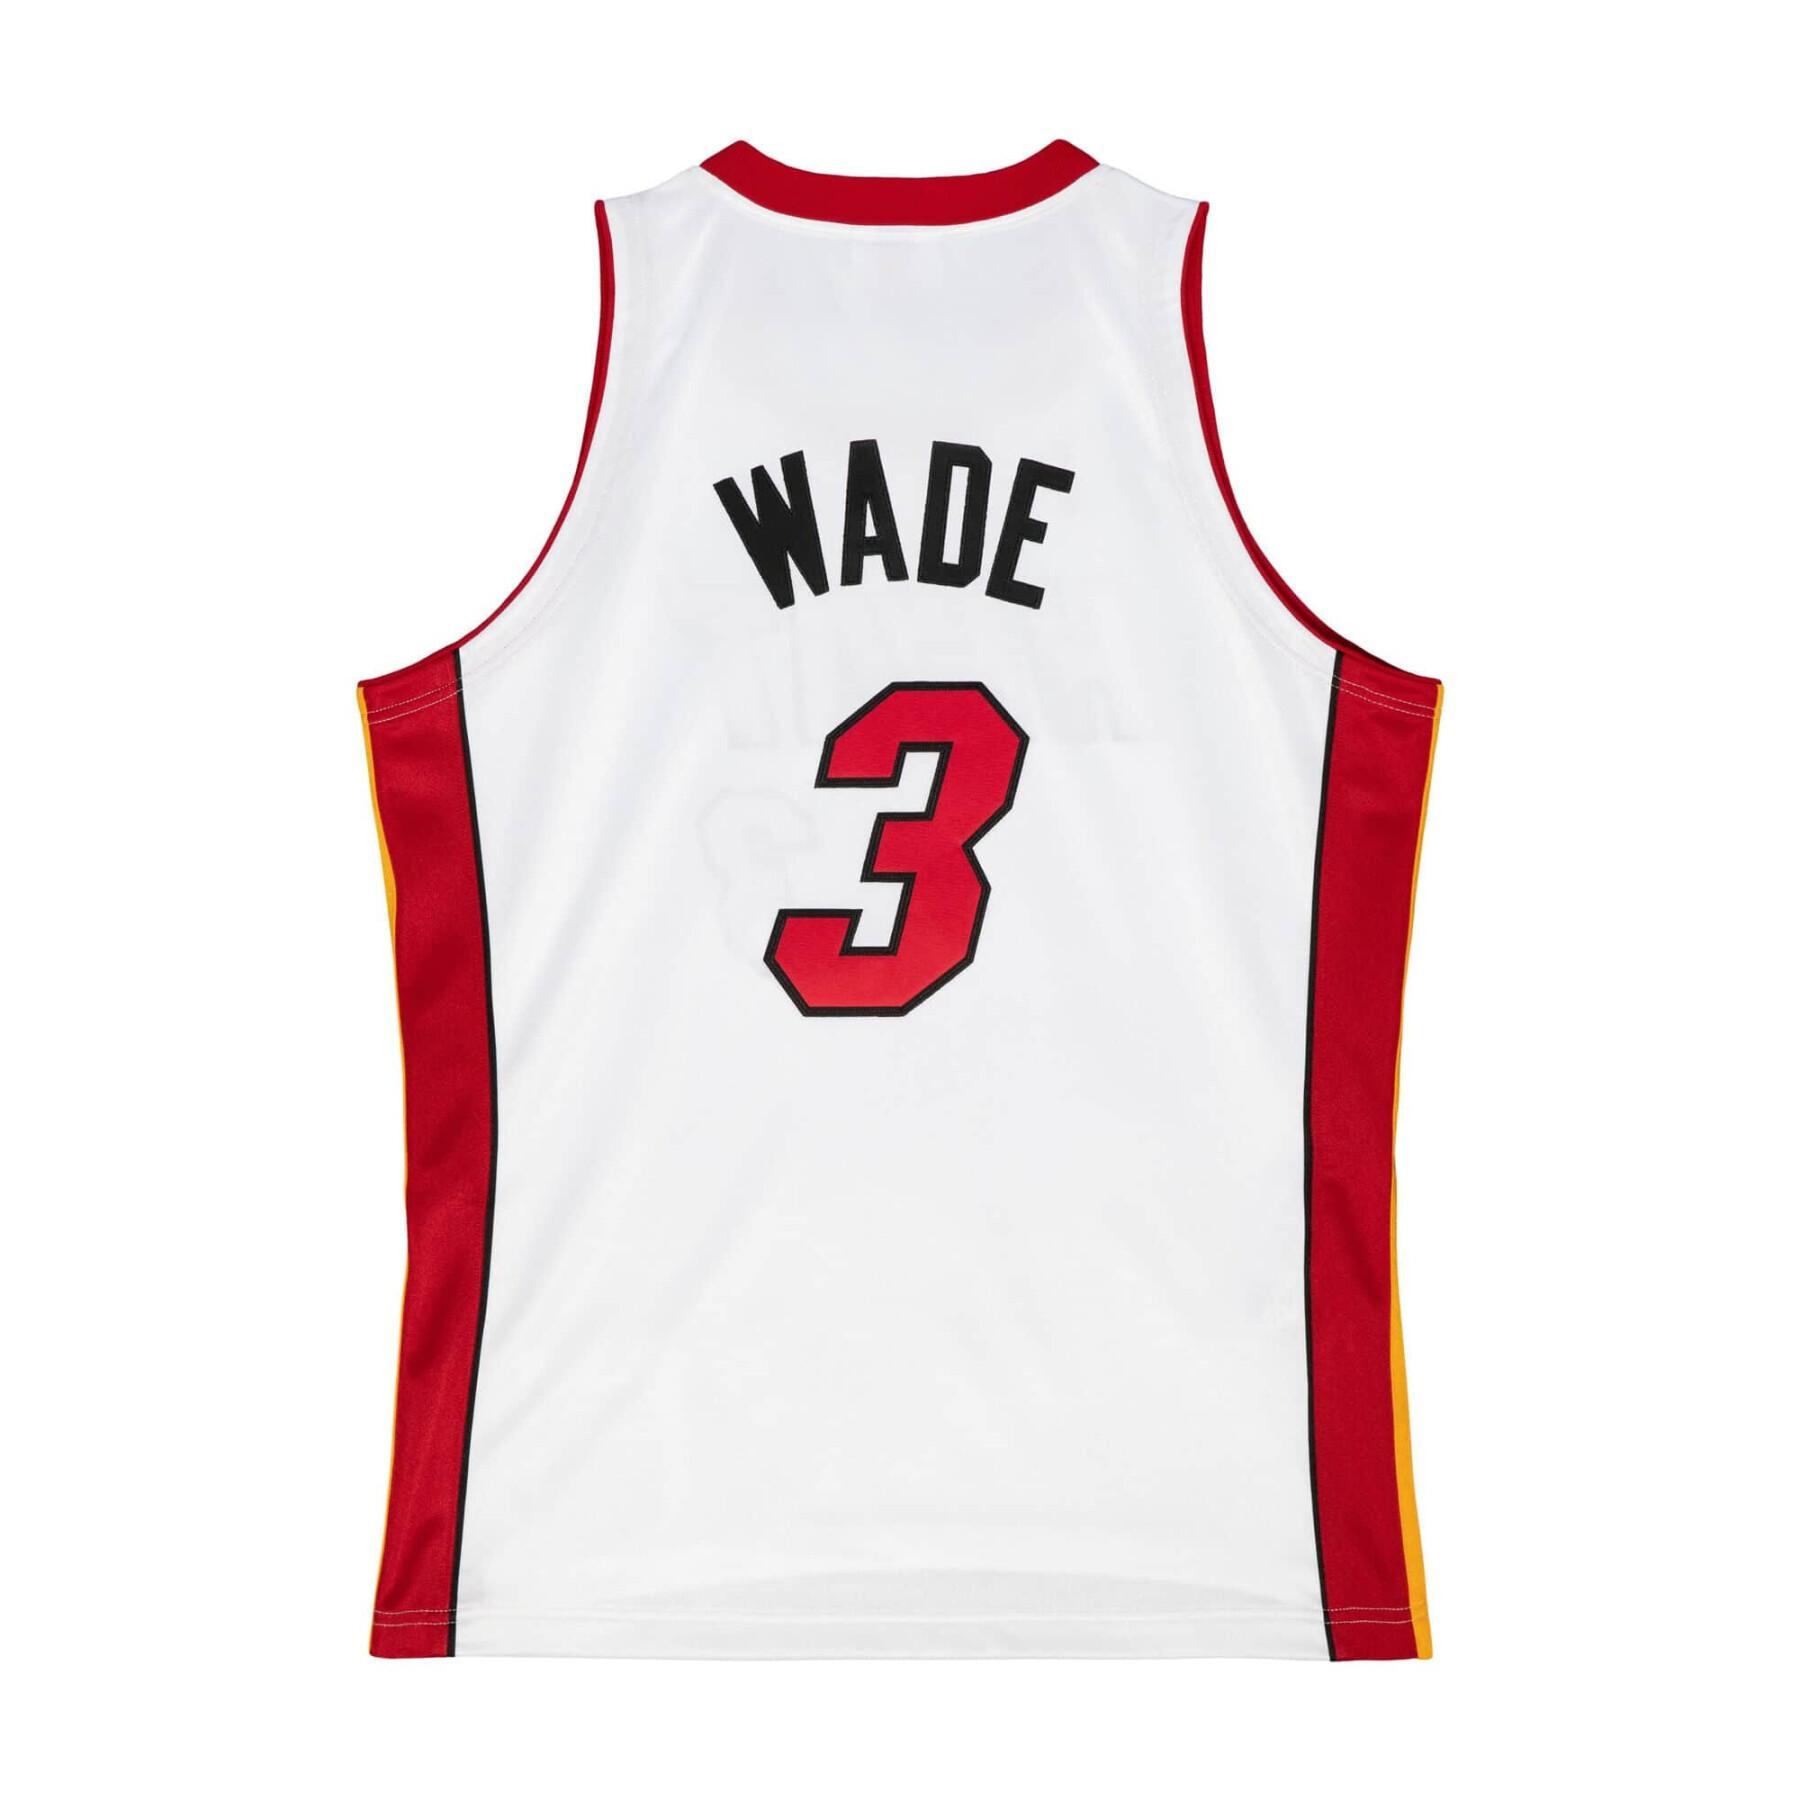 Trikot Miami Heat NBA Finals 2005 Dwyane Wade